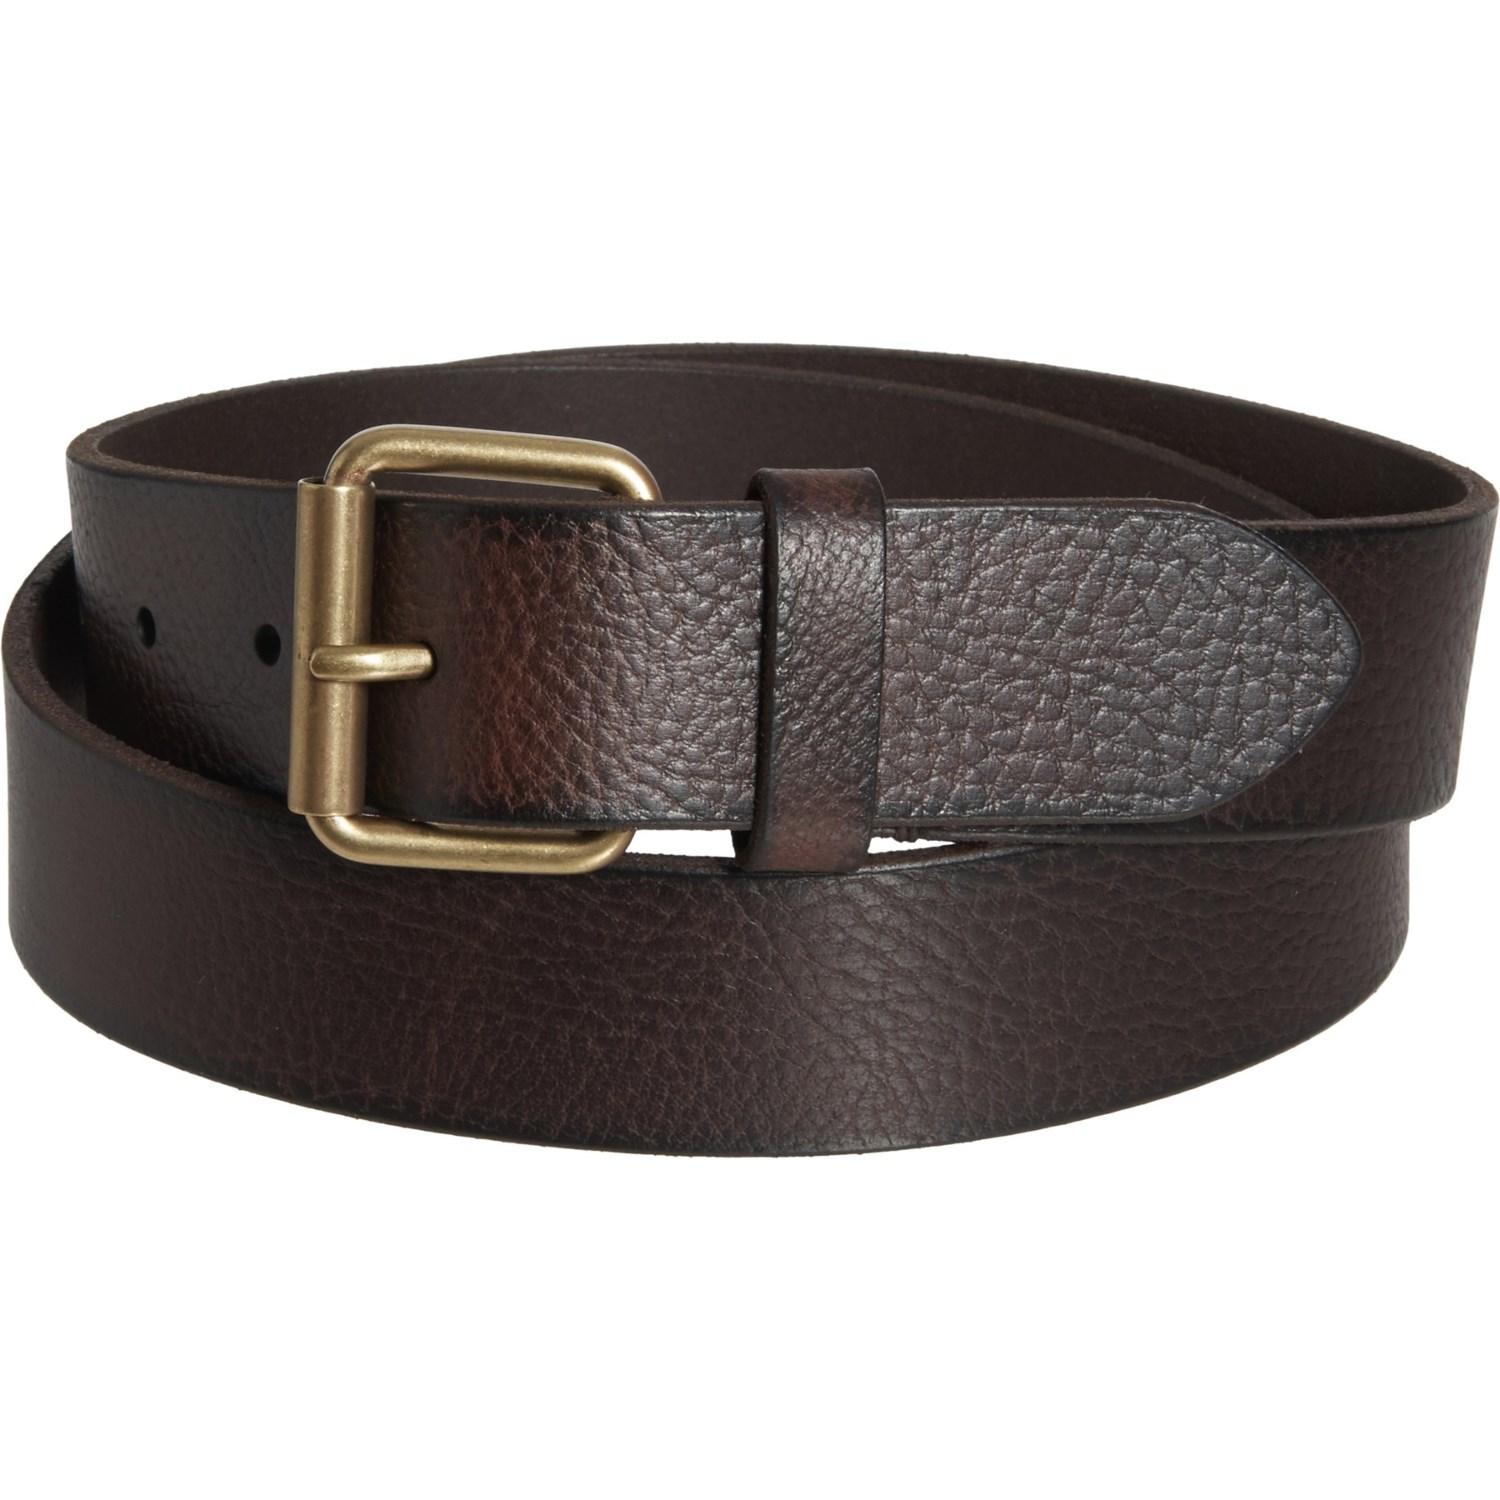 Frye Flat Panel Leather Belt in Brown for Men - Lyst